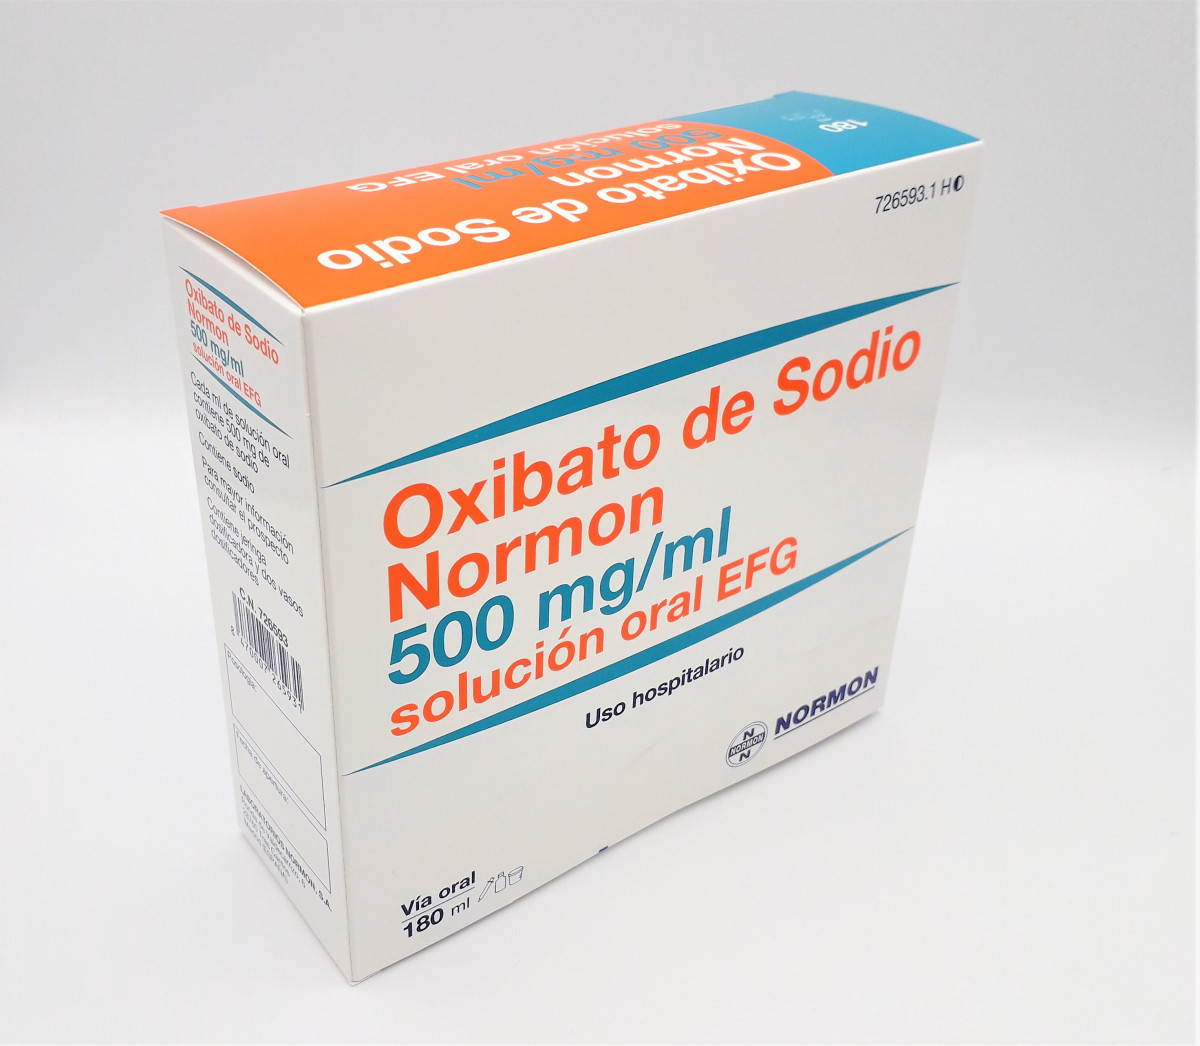 OXIBATO DE SODIO NORMON 500 MG/ML SOLUCION ORAL EFG, 1 frasco de 180 ml fotografía del envase.